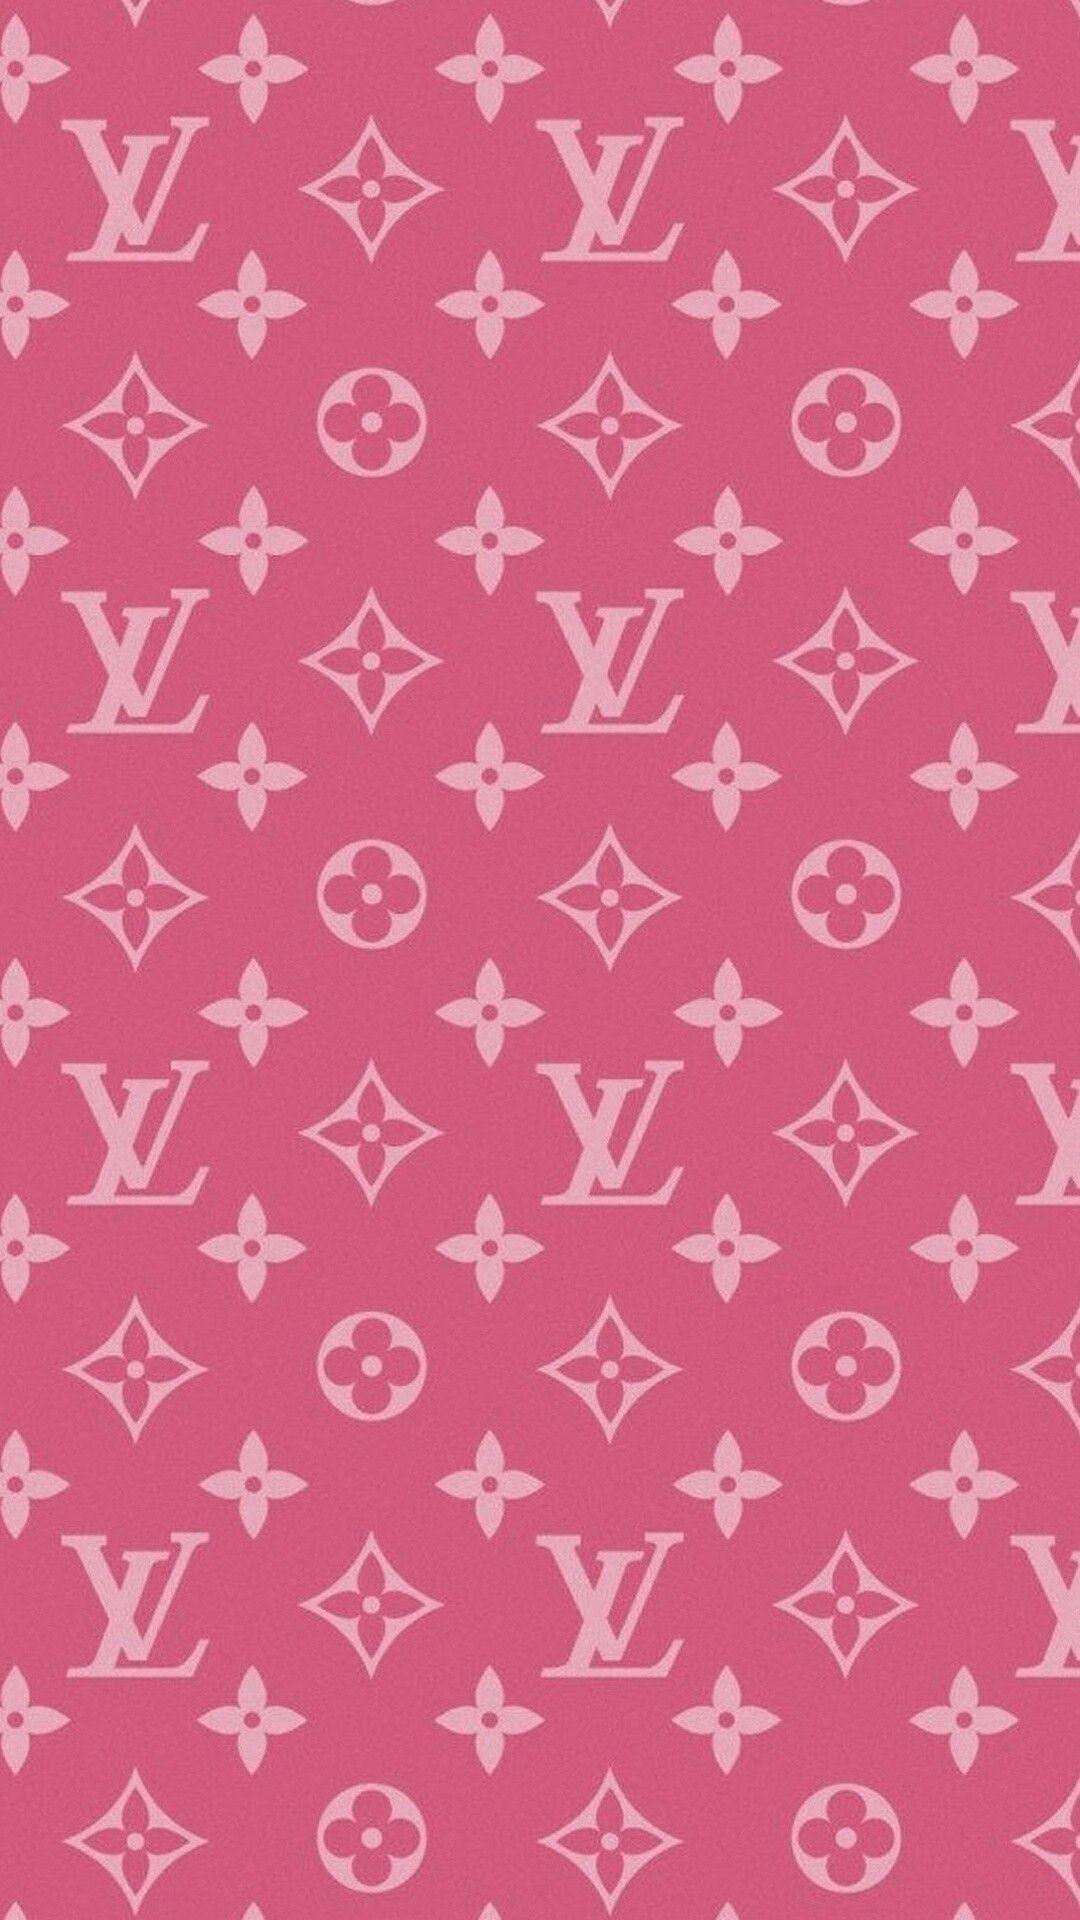 Louis Vuitton Monogram Wallpapers - Top Free Louis Vuitton